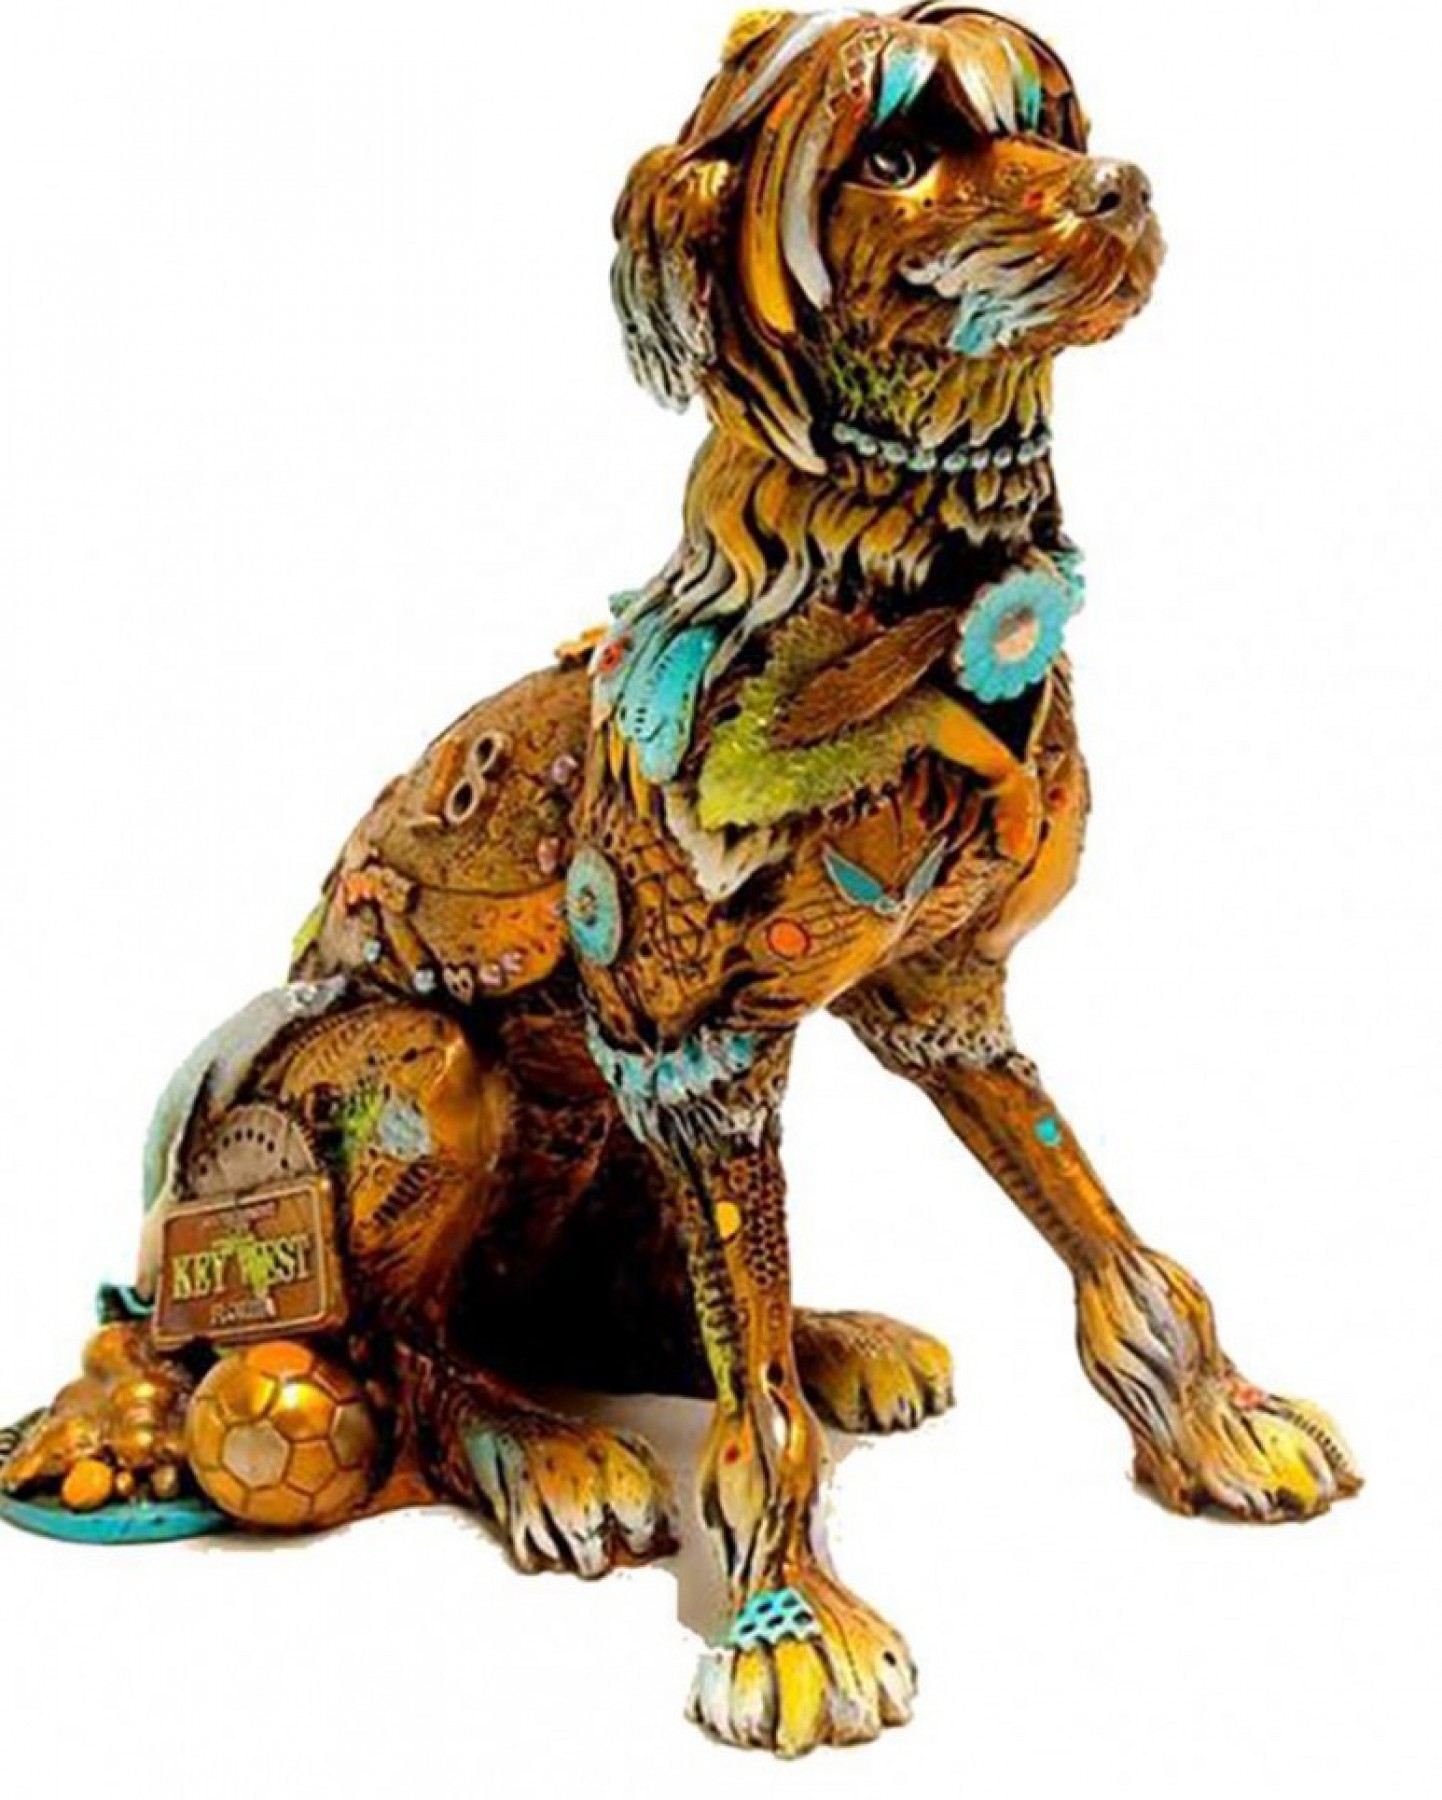 Signed, limited edition bronze dog sculpture